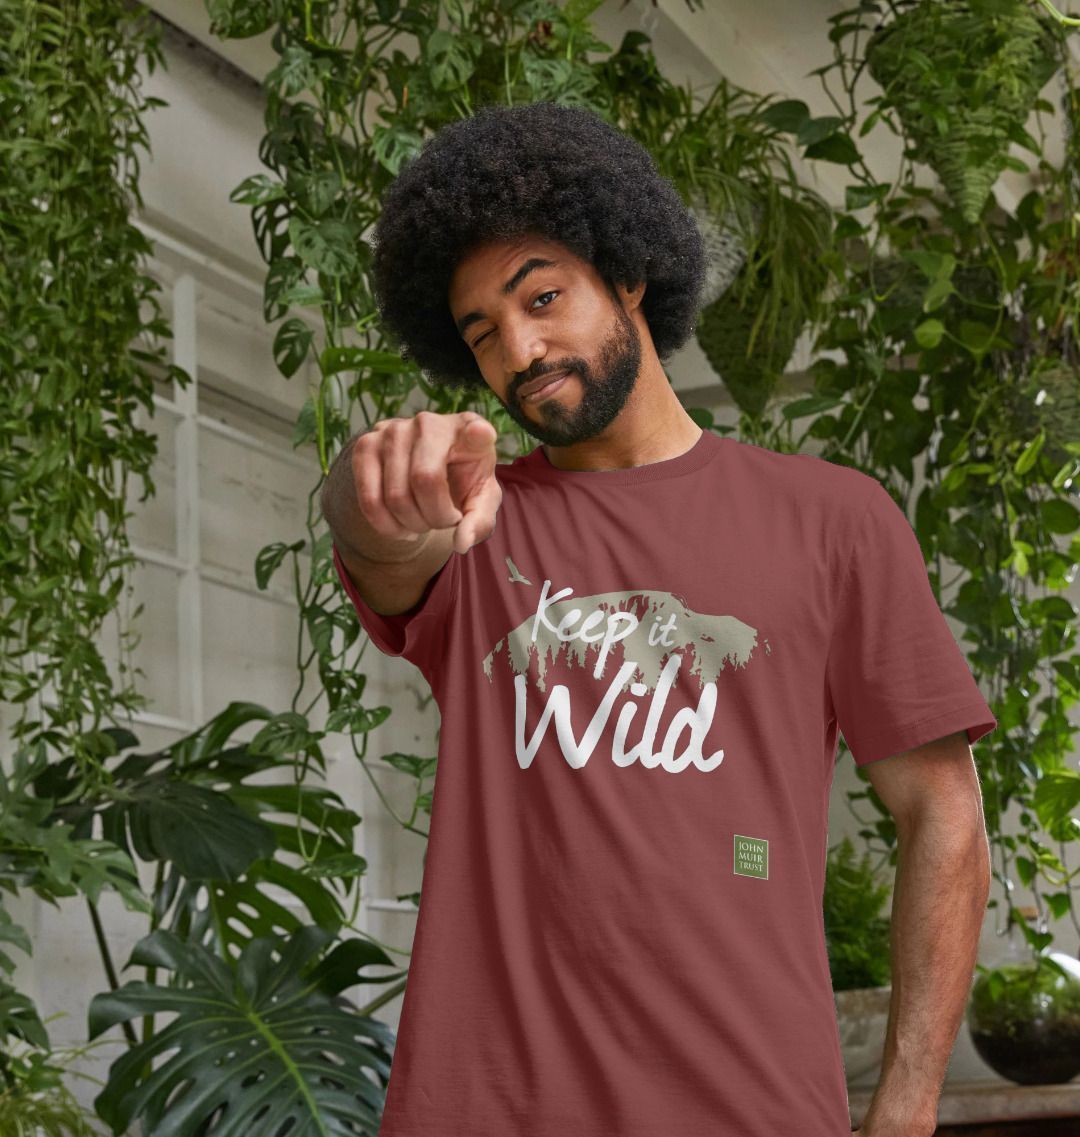 Red Wine Ben Nevis T-shirt - Keep it Wild Men's